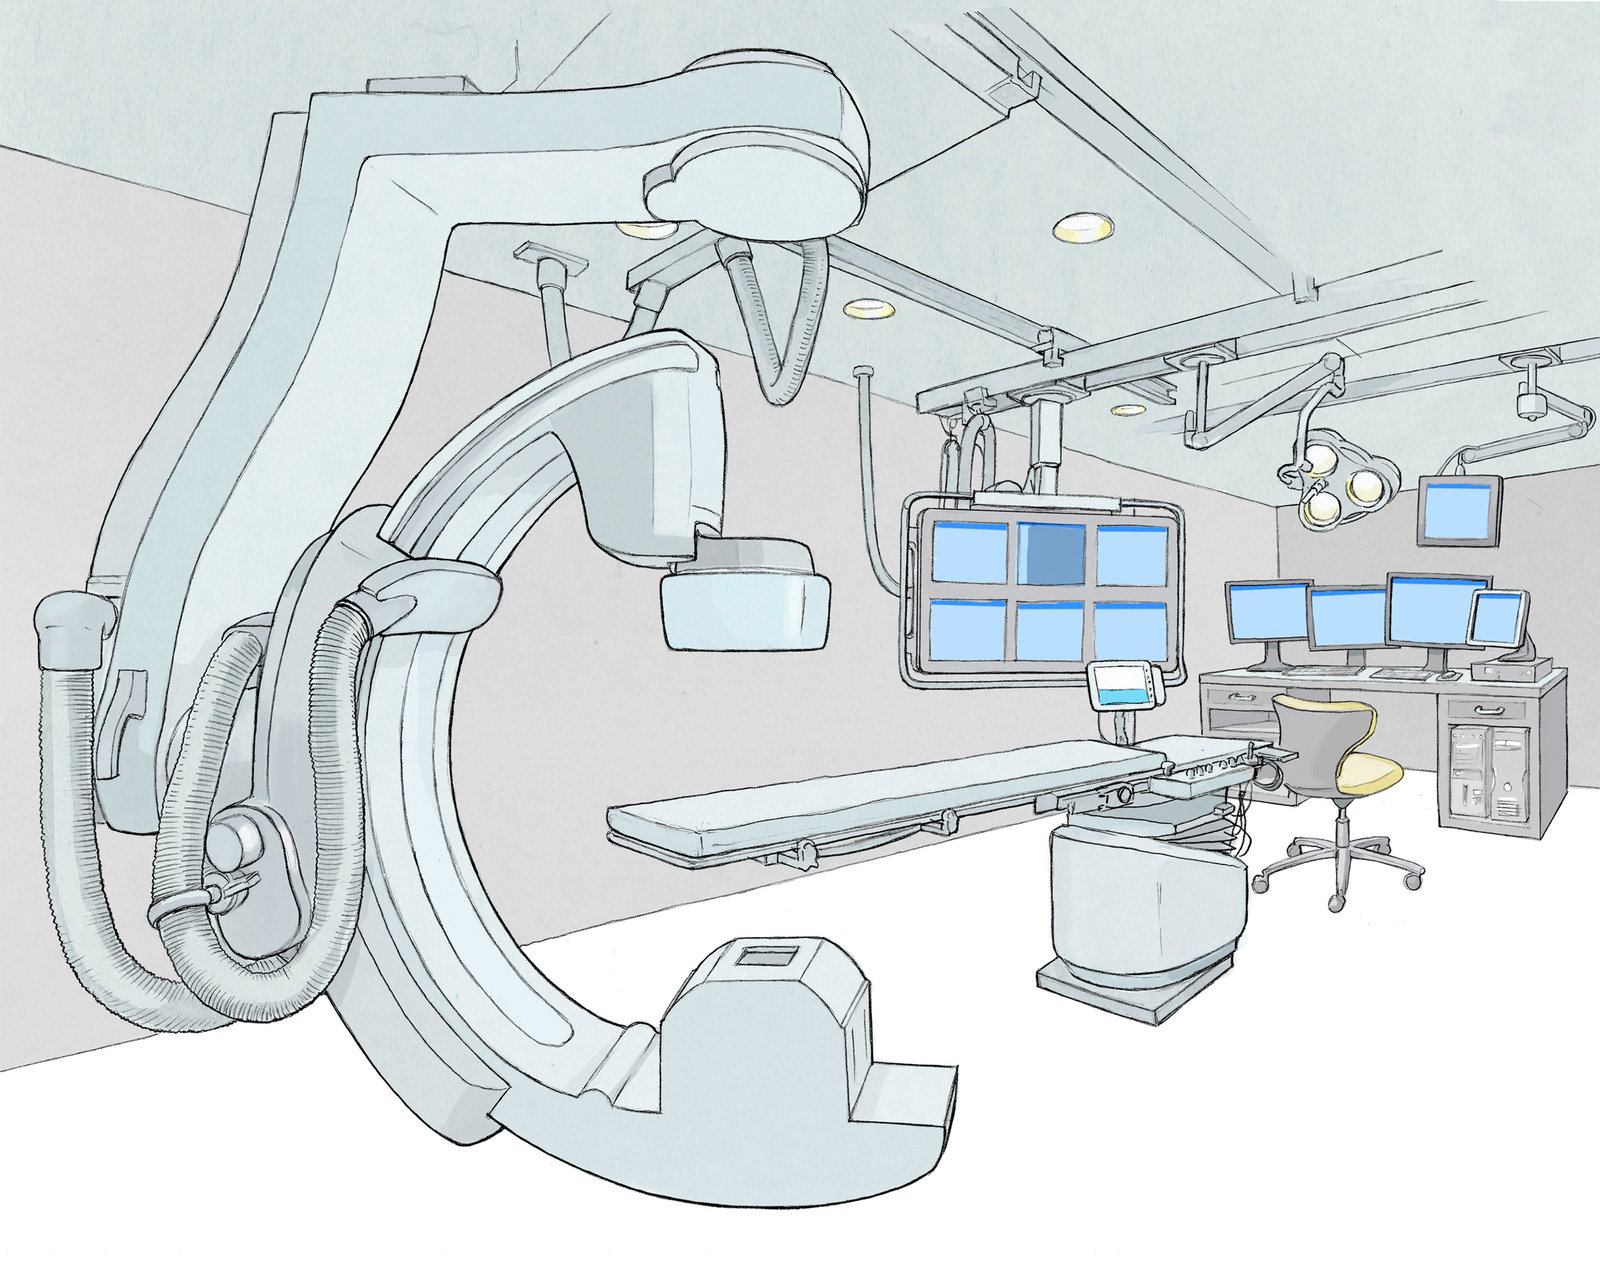 oculus-illustration-patientenbroschuere-herz-katheterlabor